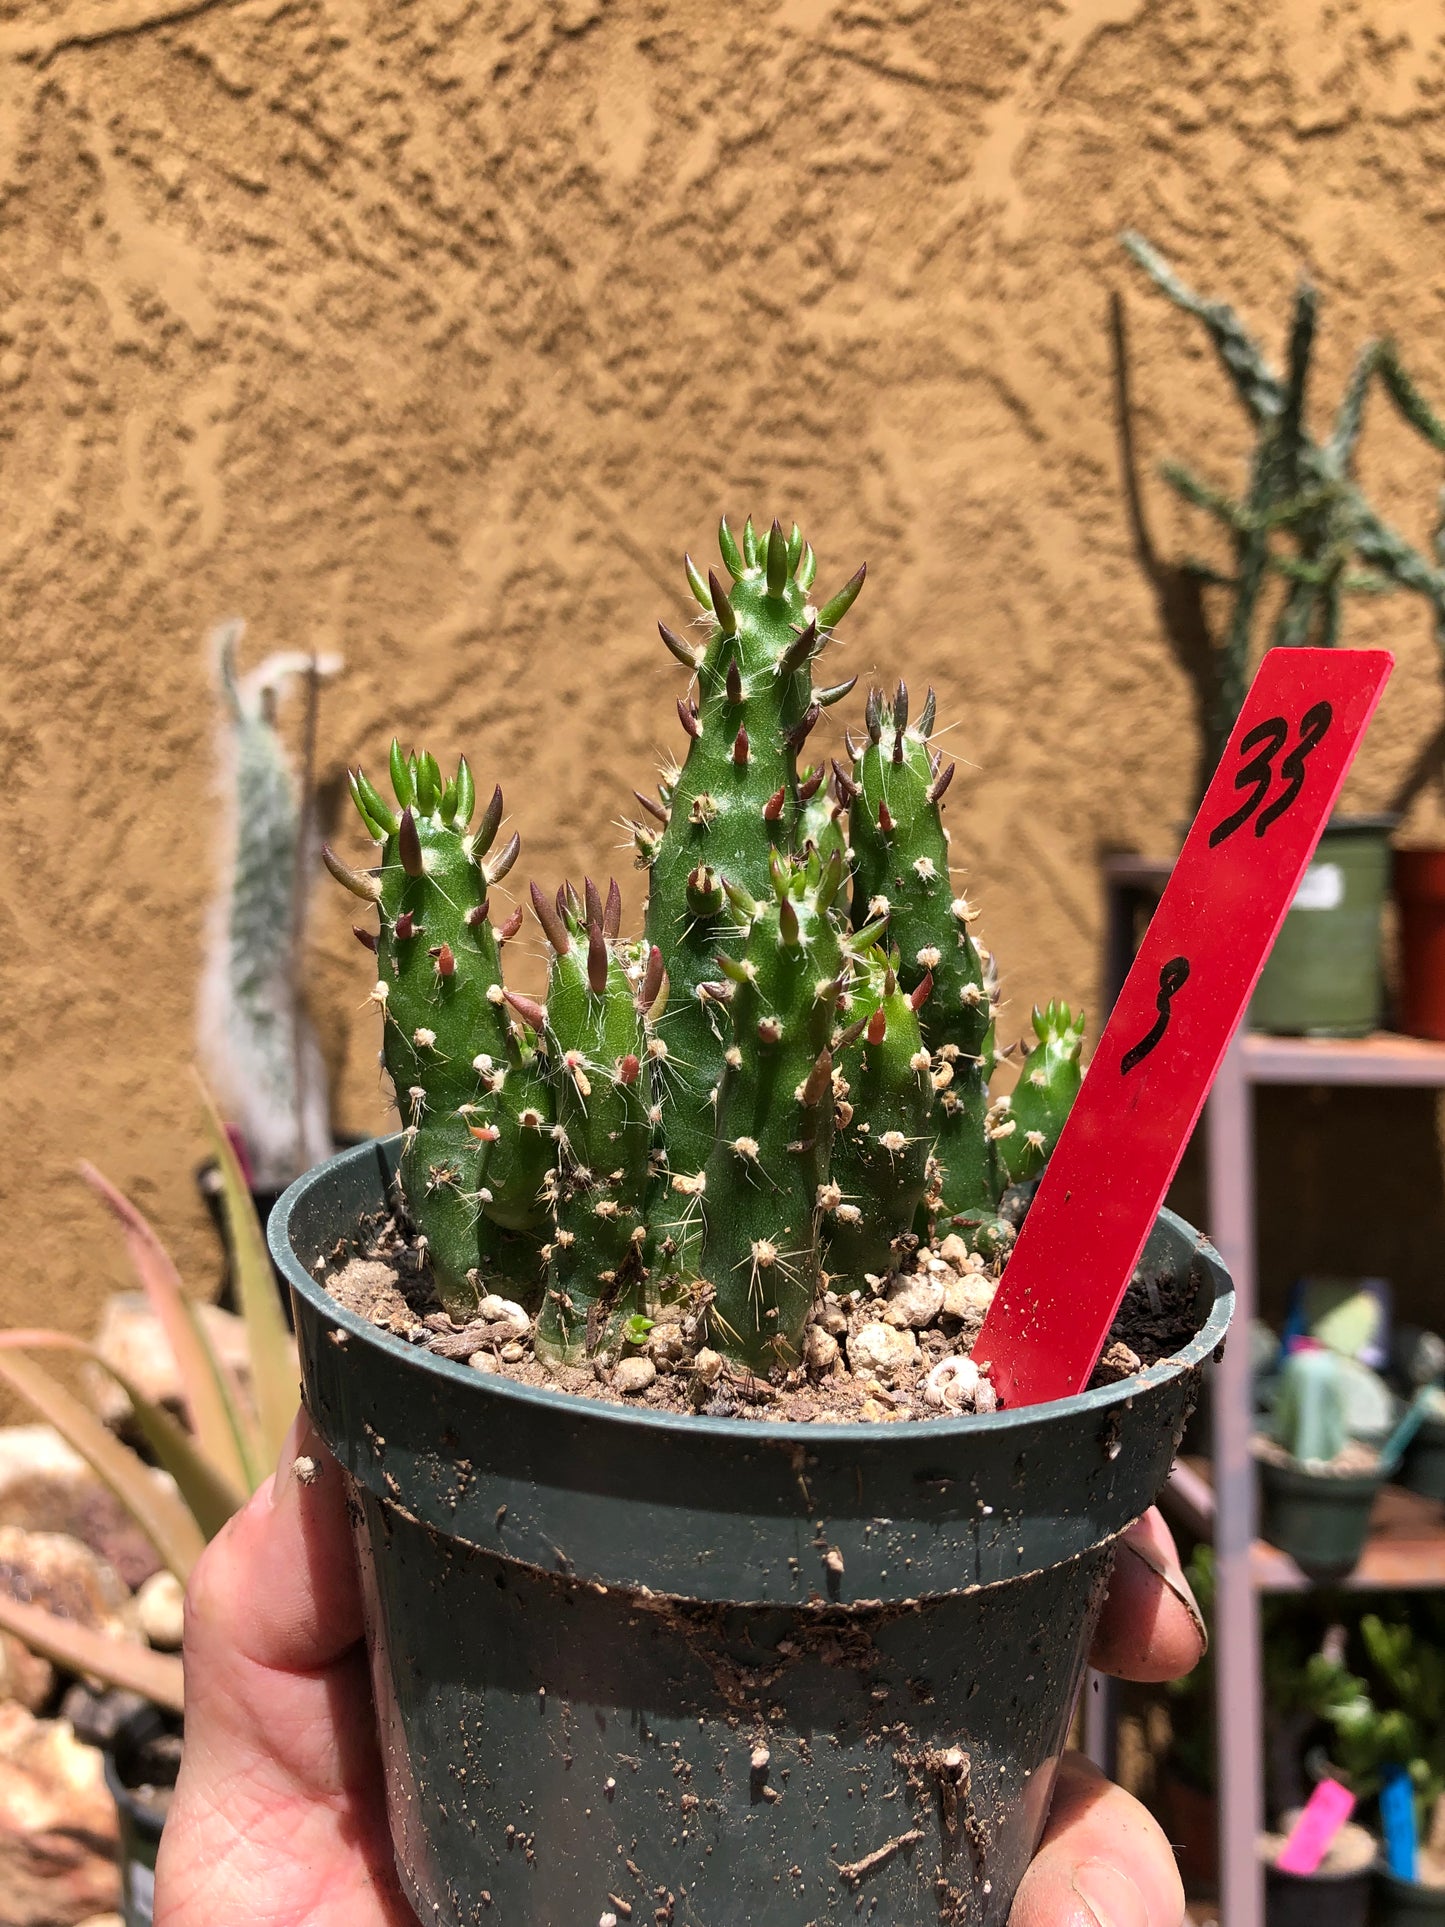 Austrocylindropuntia Cactus Gumbi Mini Eve's Needle 3"Tall #33R